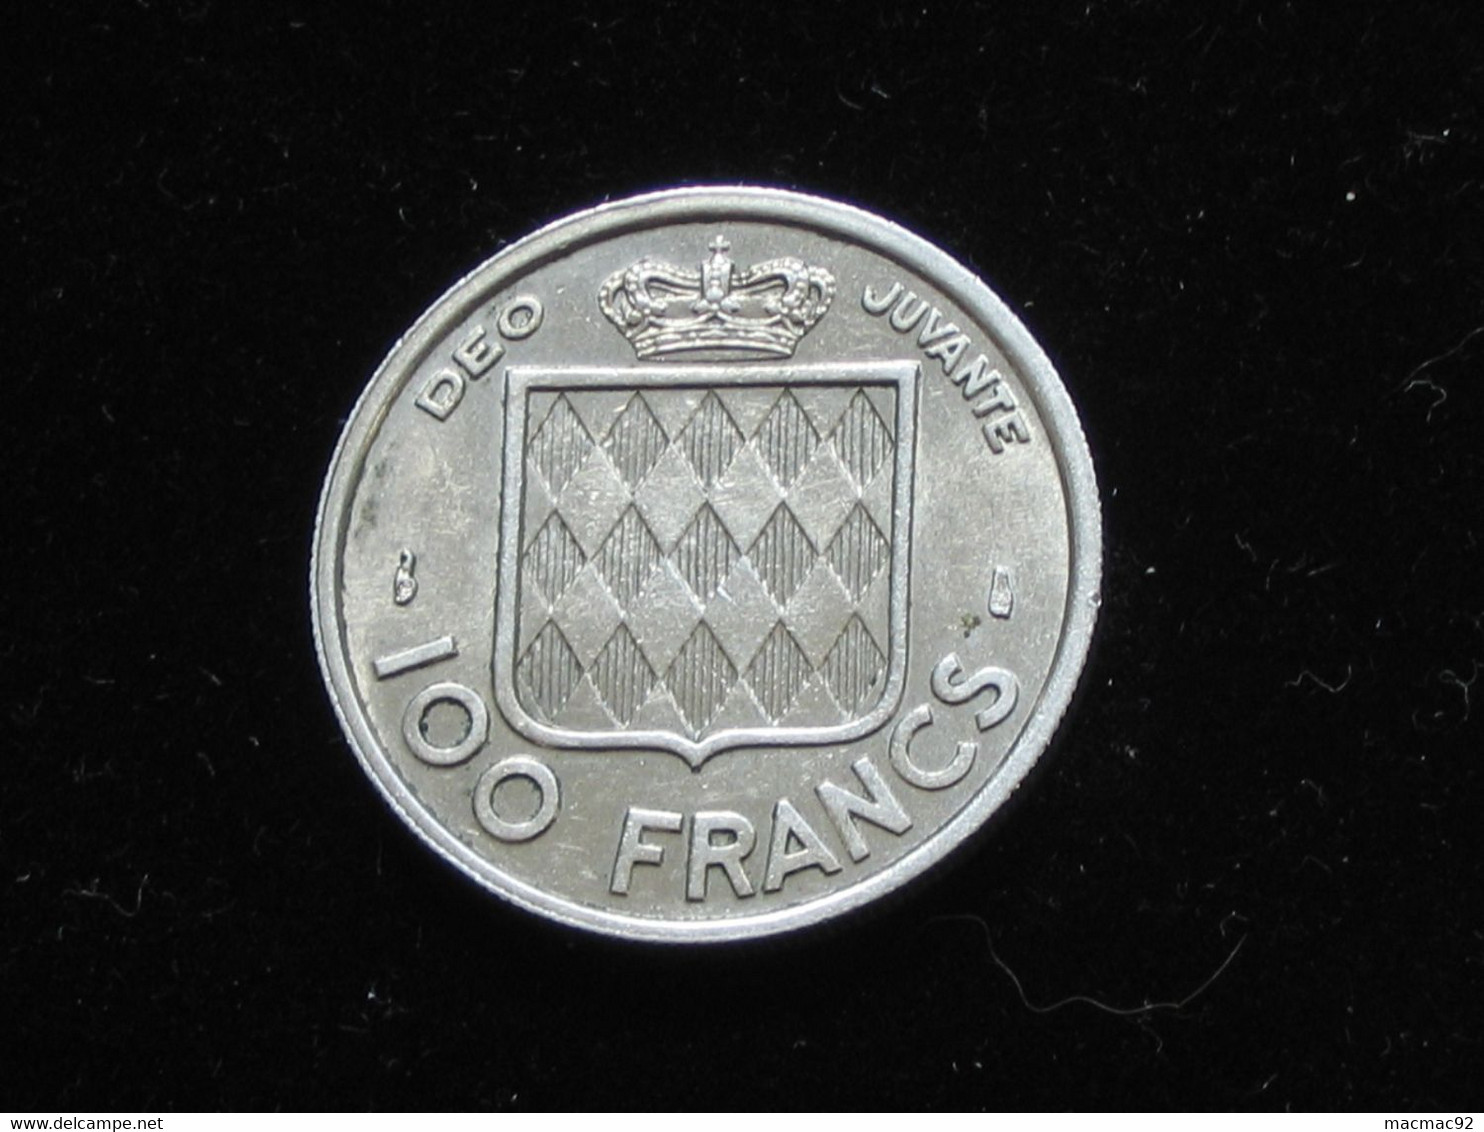 MONACO - 100 Frs 1956 - Rainier III Prince De Monaco **** EN ACHAT IMMEDIAT **** - 1949-1956 Alte Francs